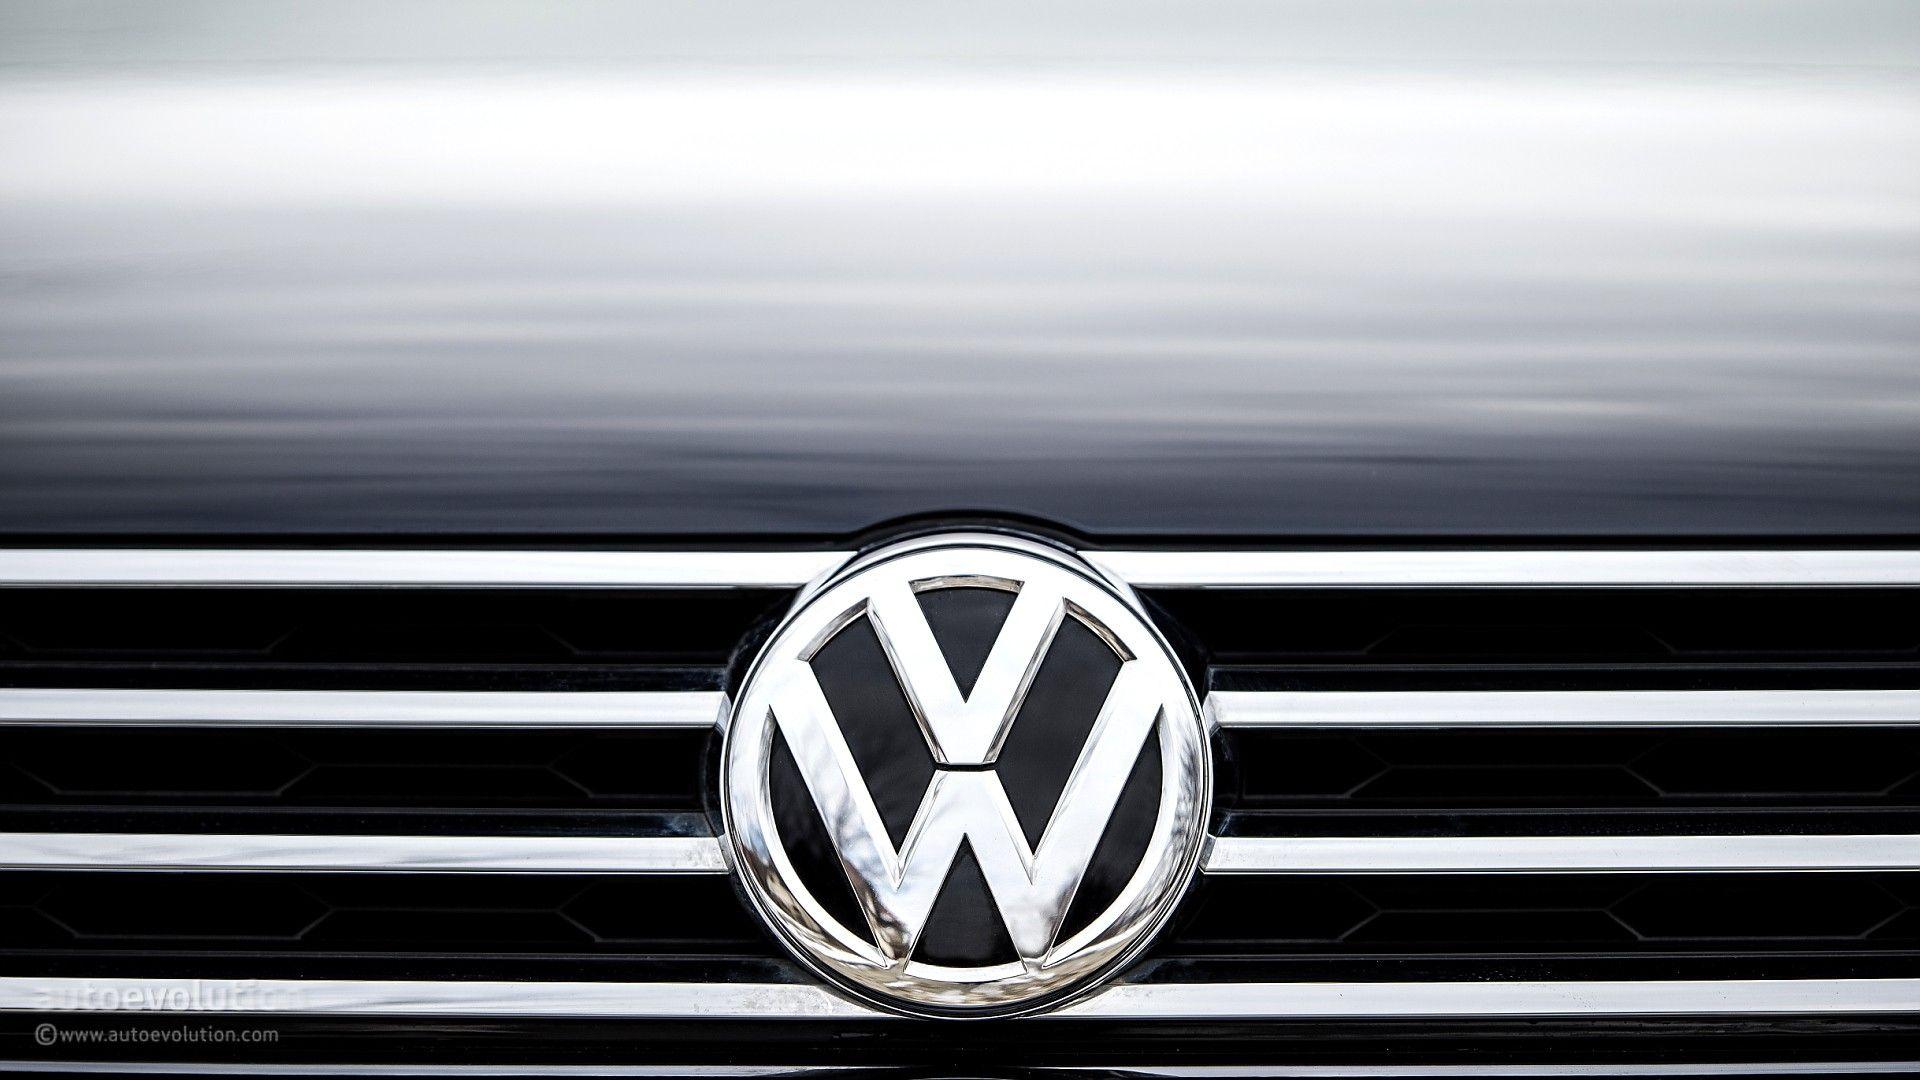 VW Grill Logo - VOLKSWAGEN Touareg Review